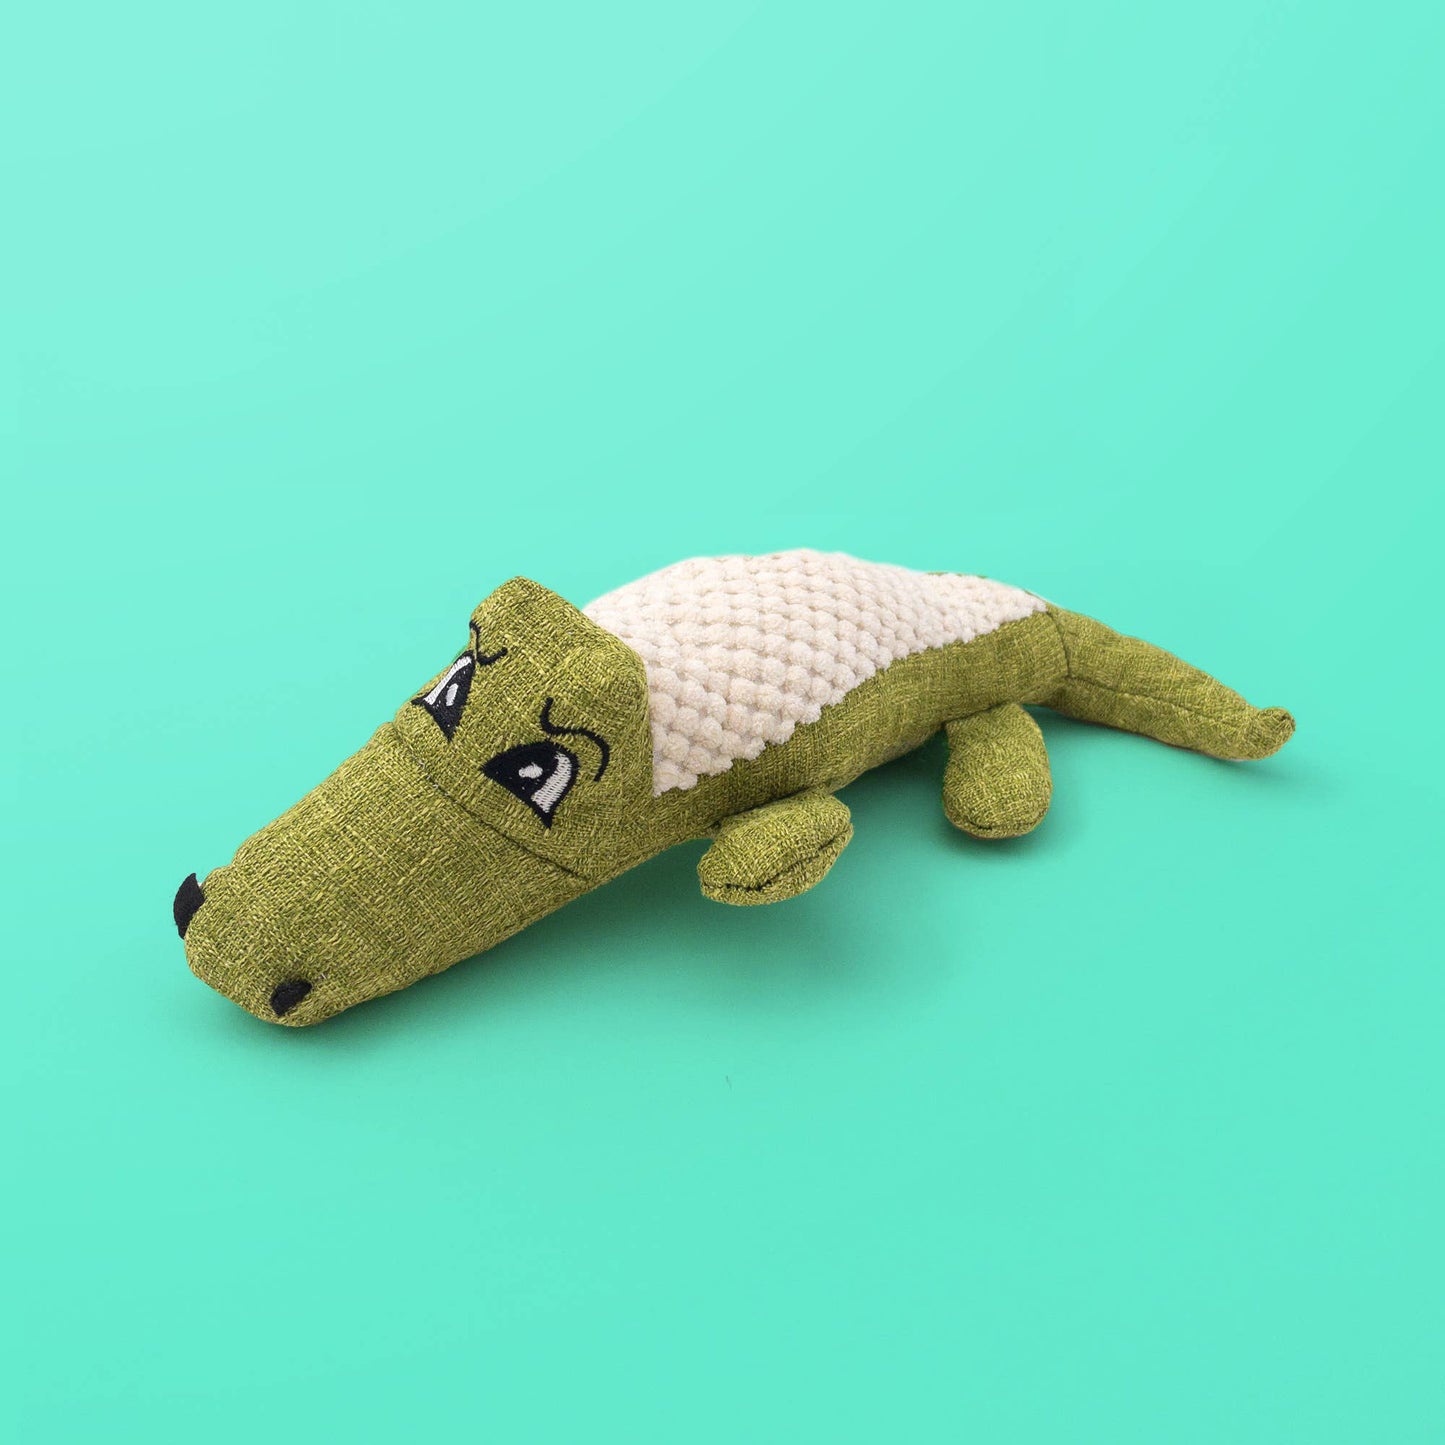 Alligator Plush Toy - Green